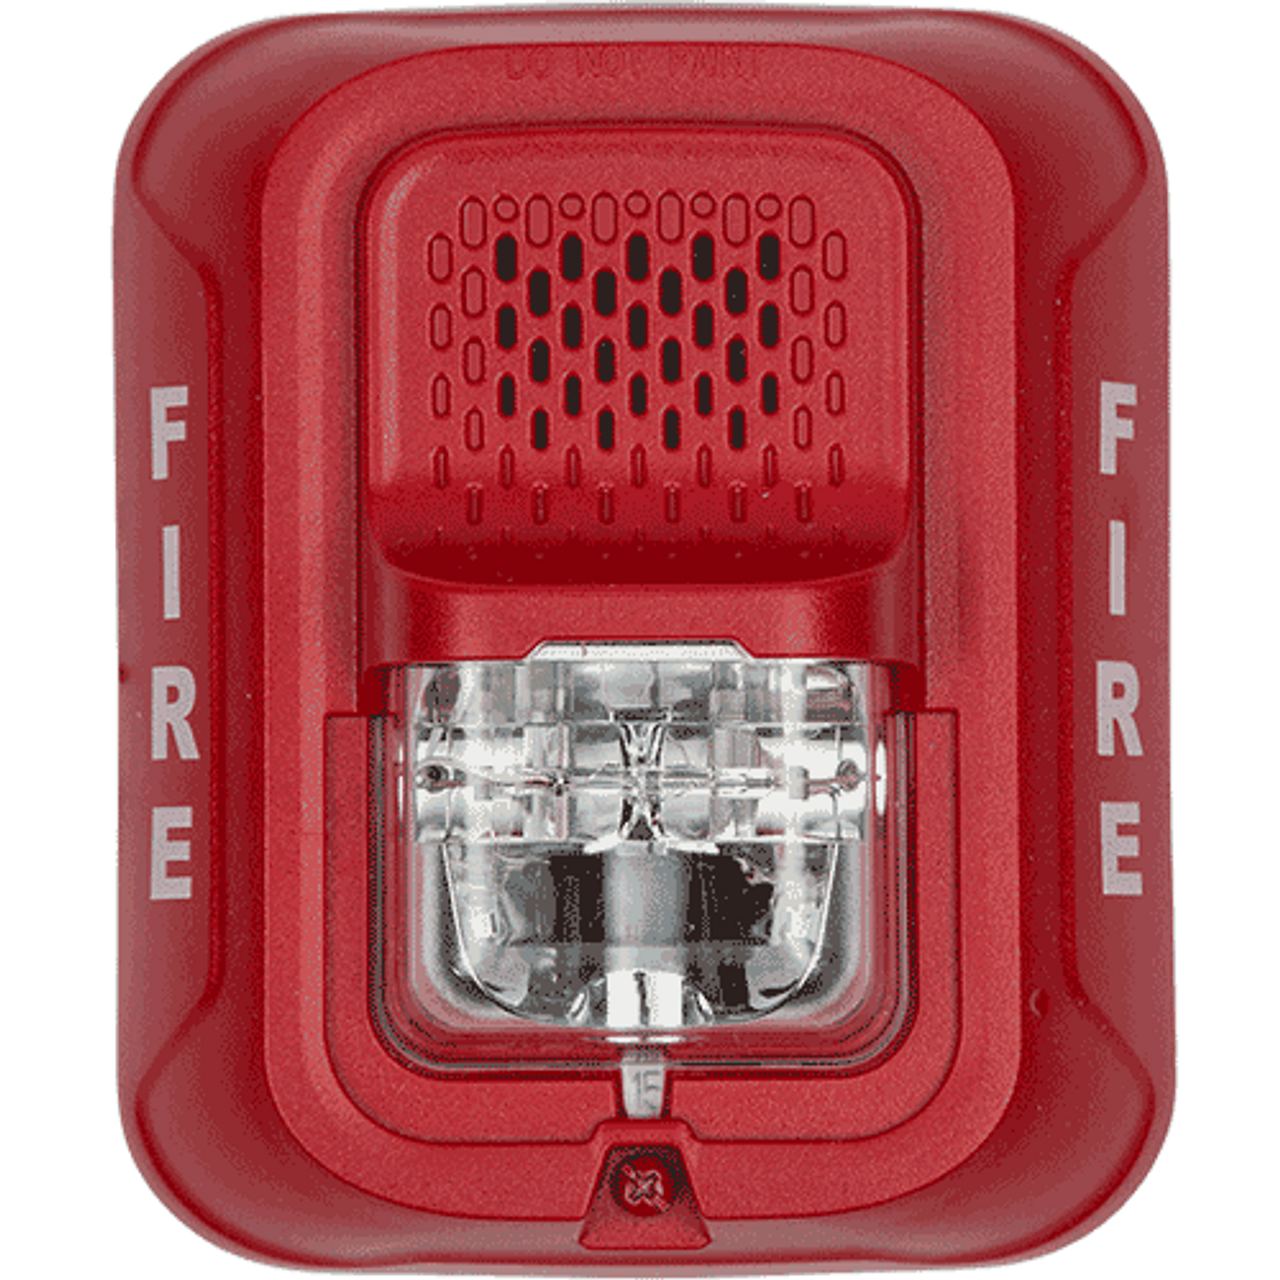 Fire Alarm Strobe Light 4k Hidden Camera W Battery Wi Fi Remote Viewing Spyassociates Com